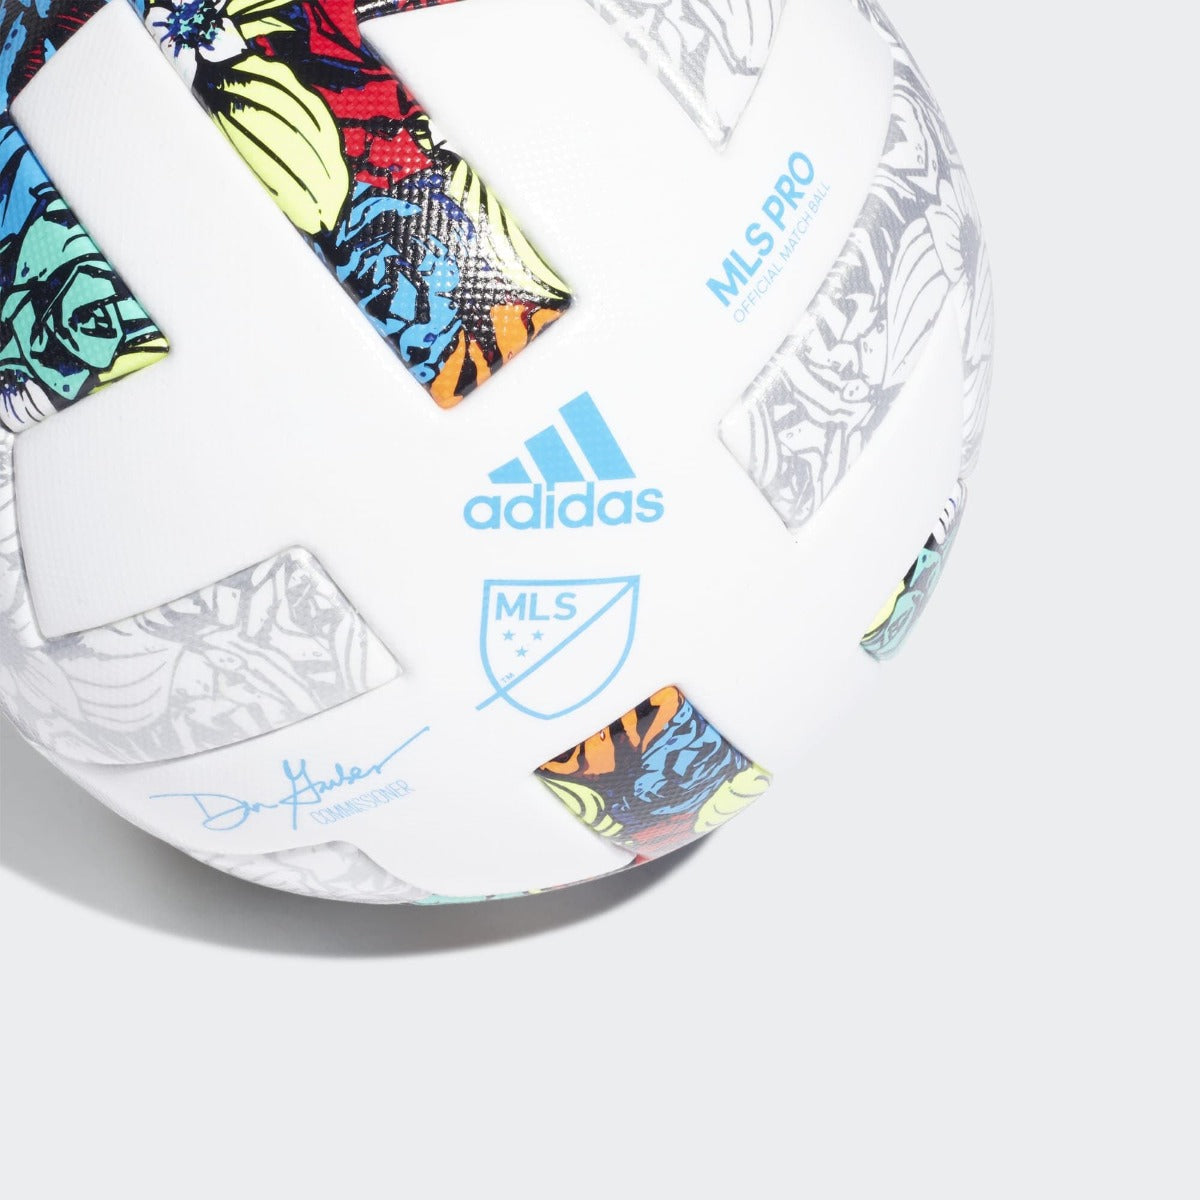 adidas MLS Pro Ball - White-Solar Yellow-Power Blue (Detail 2)